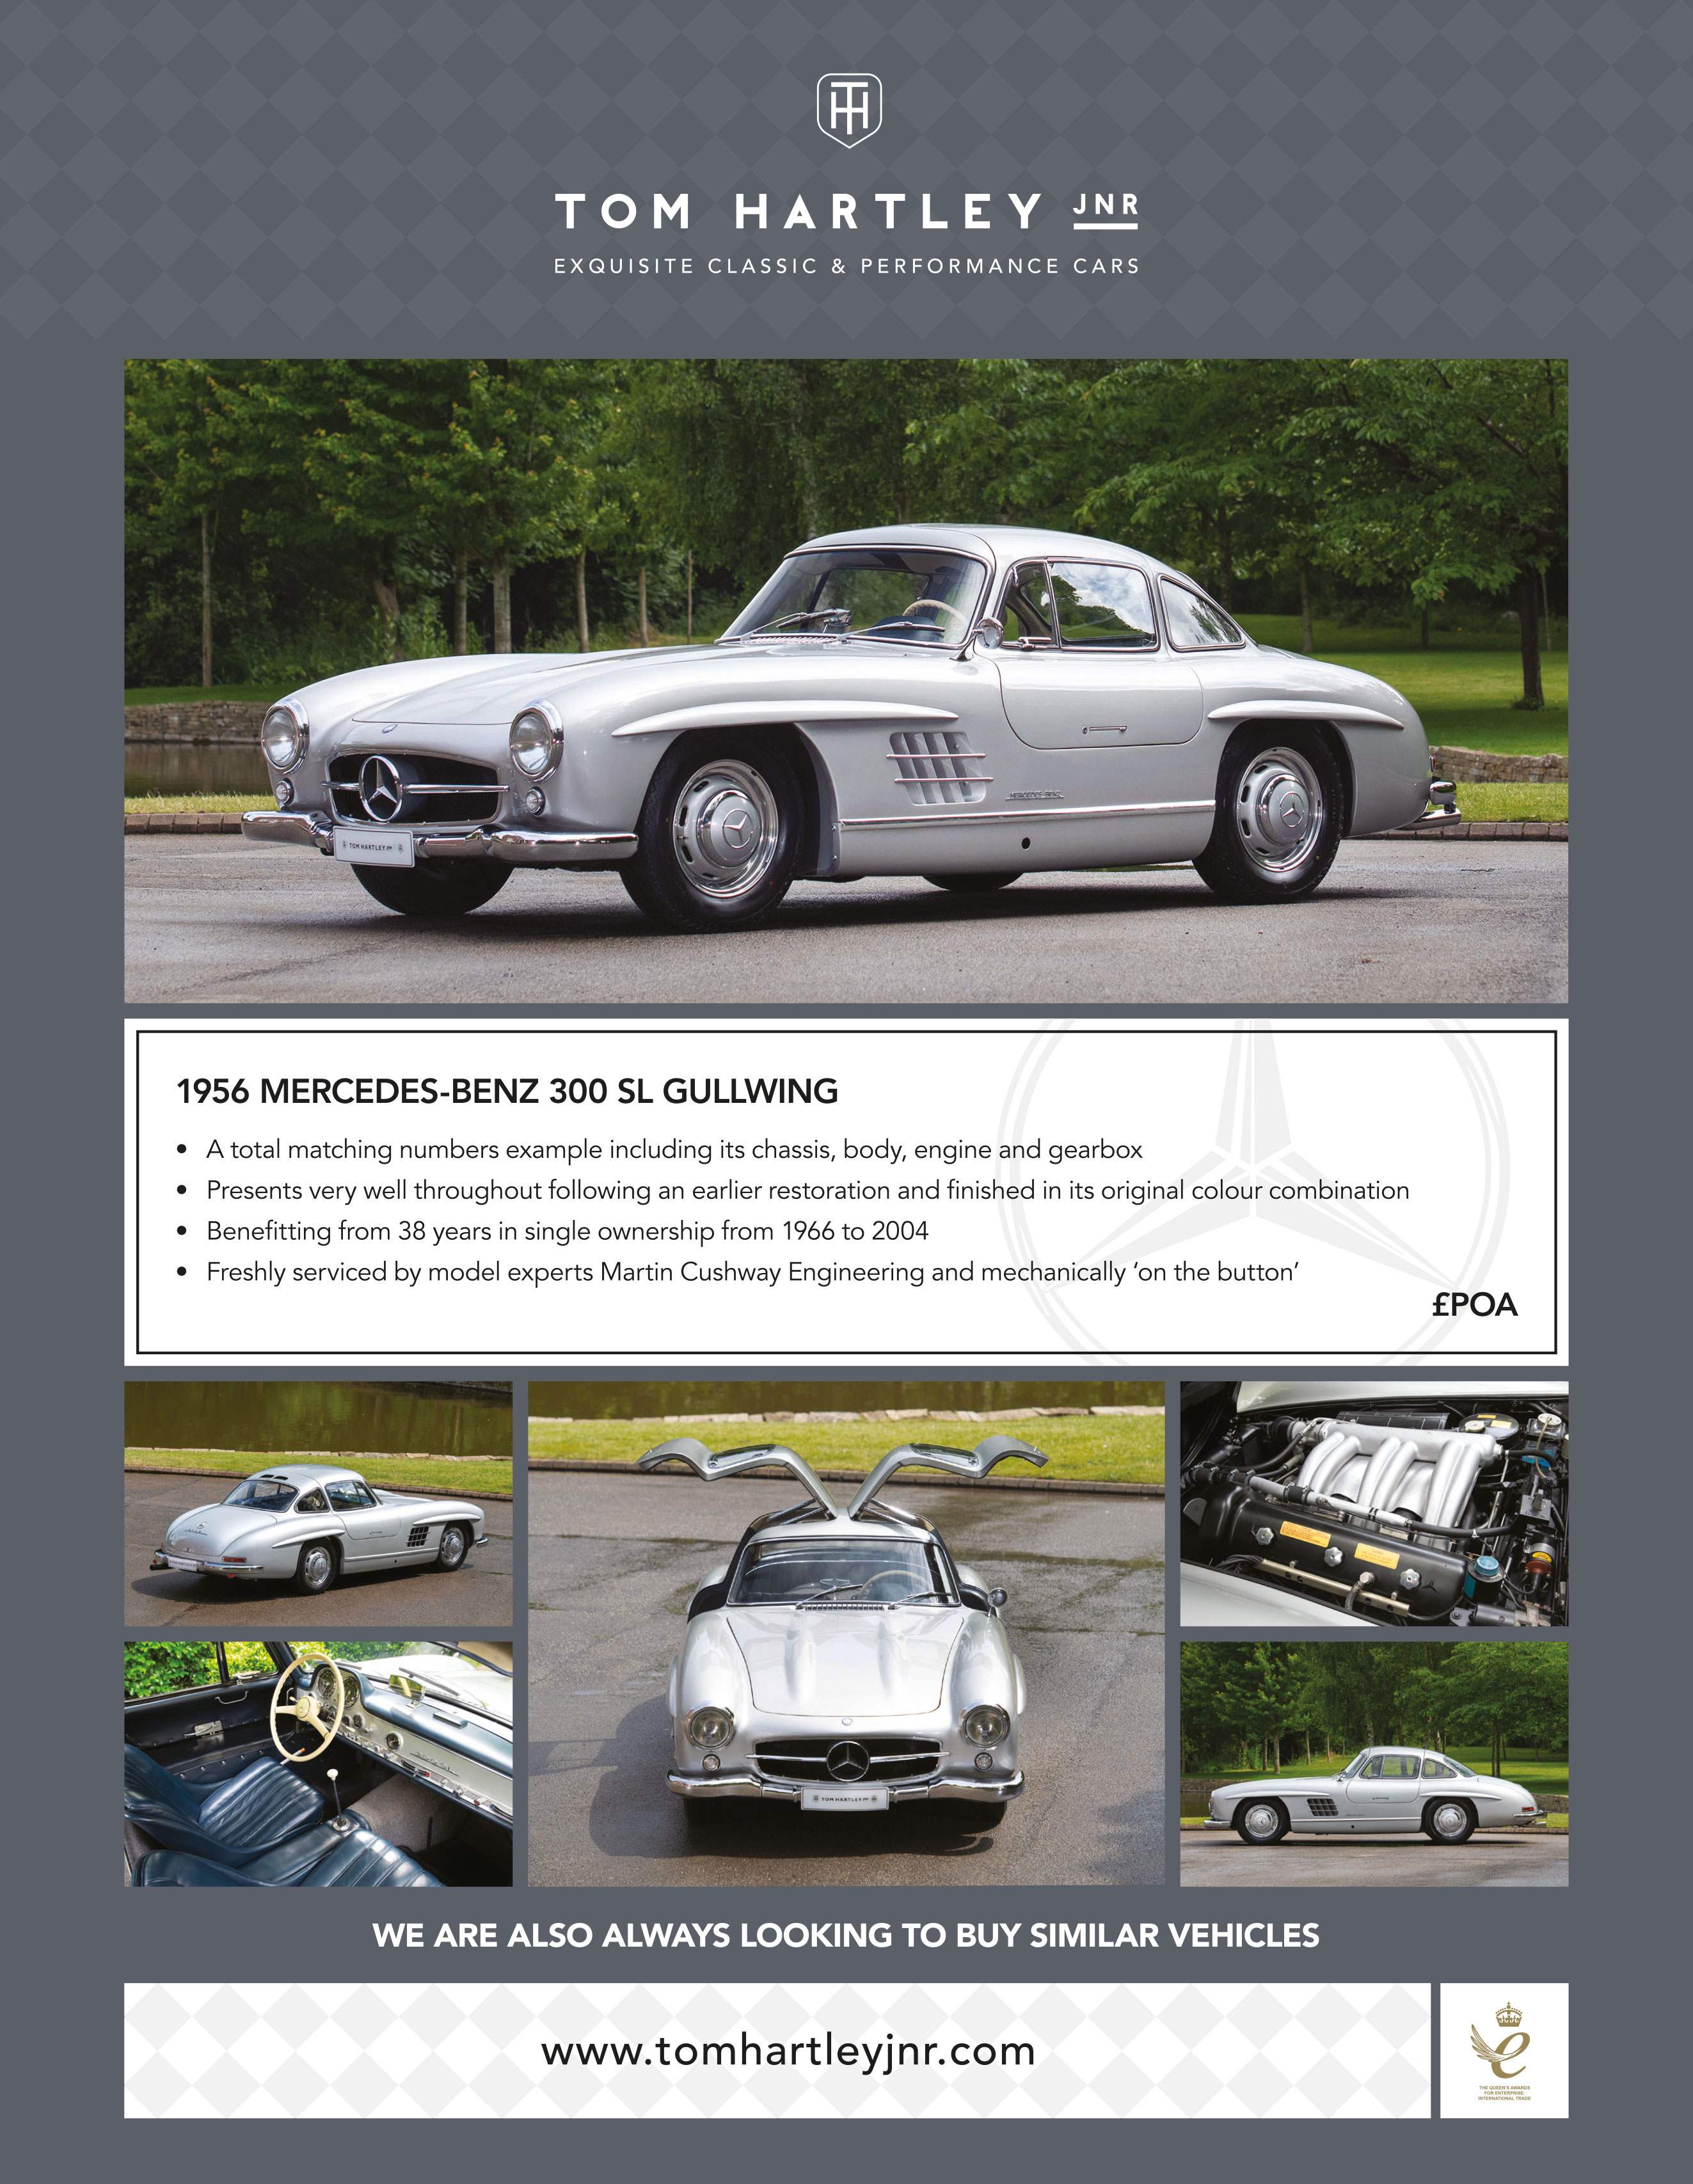 Jaguar XE SV Project 8: the limited edition Nürburgring record-holder - Motor  Sport Magazine